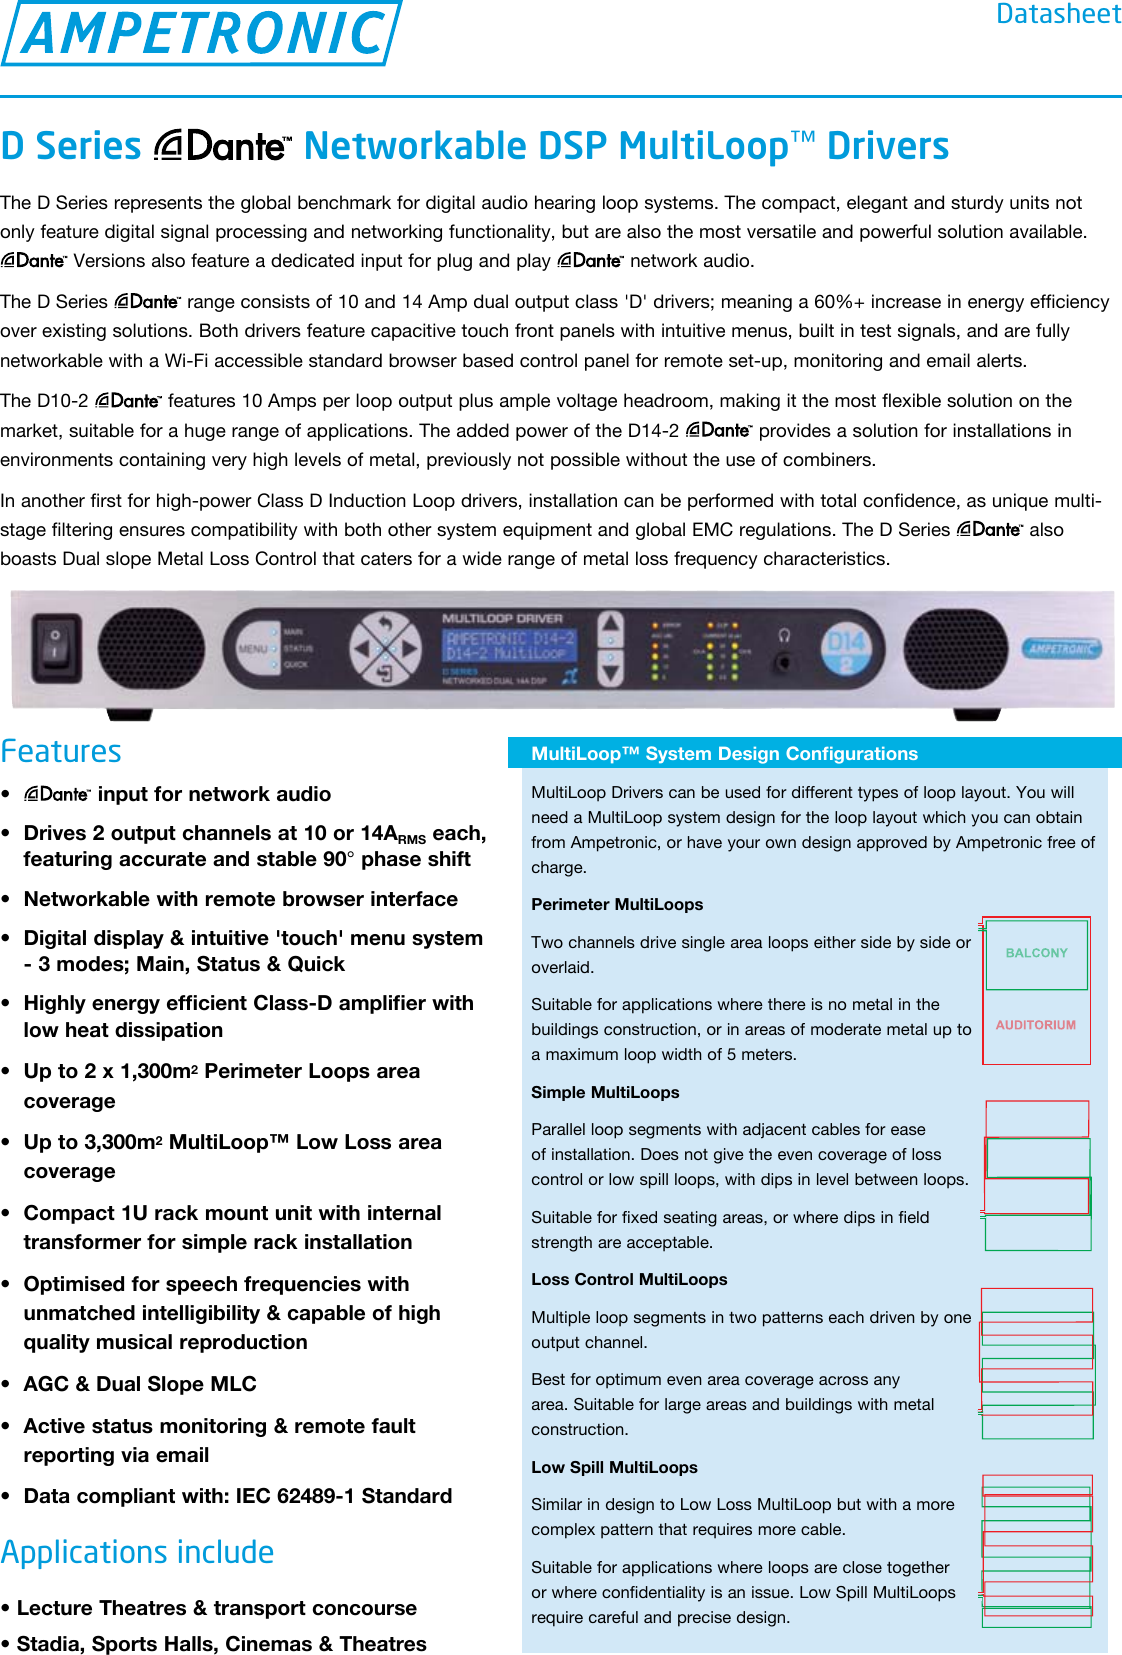 Page 1 of 2 - Ampd102Dante Pdf User Manual